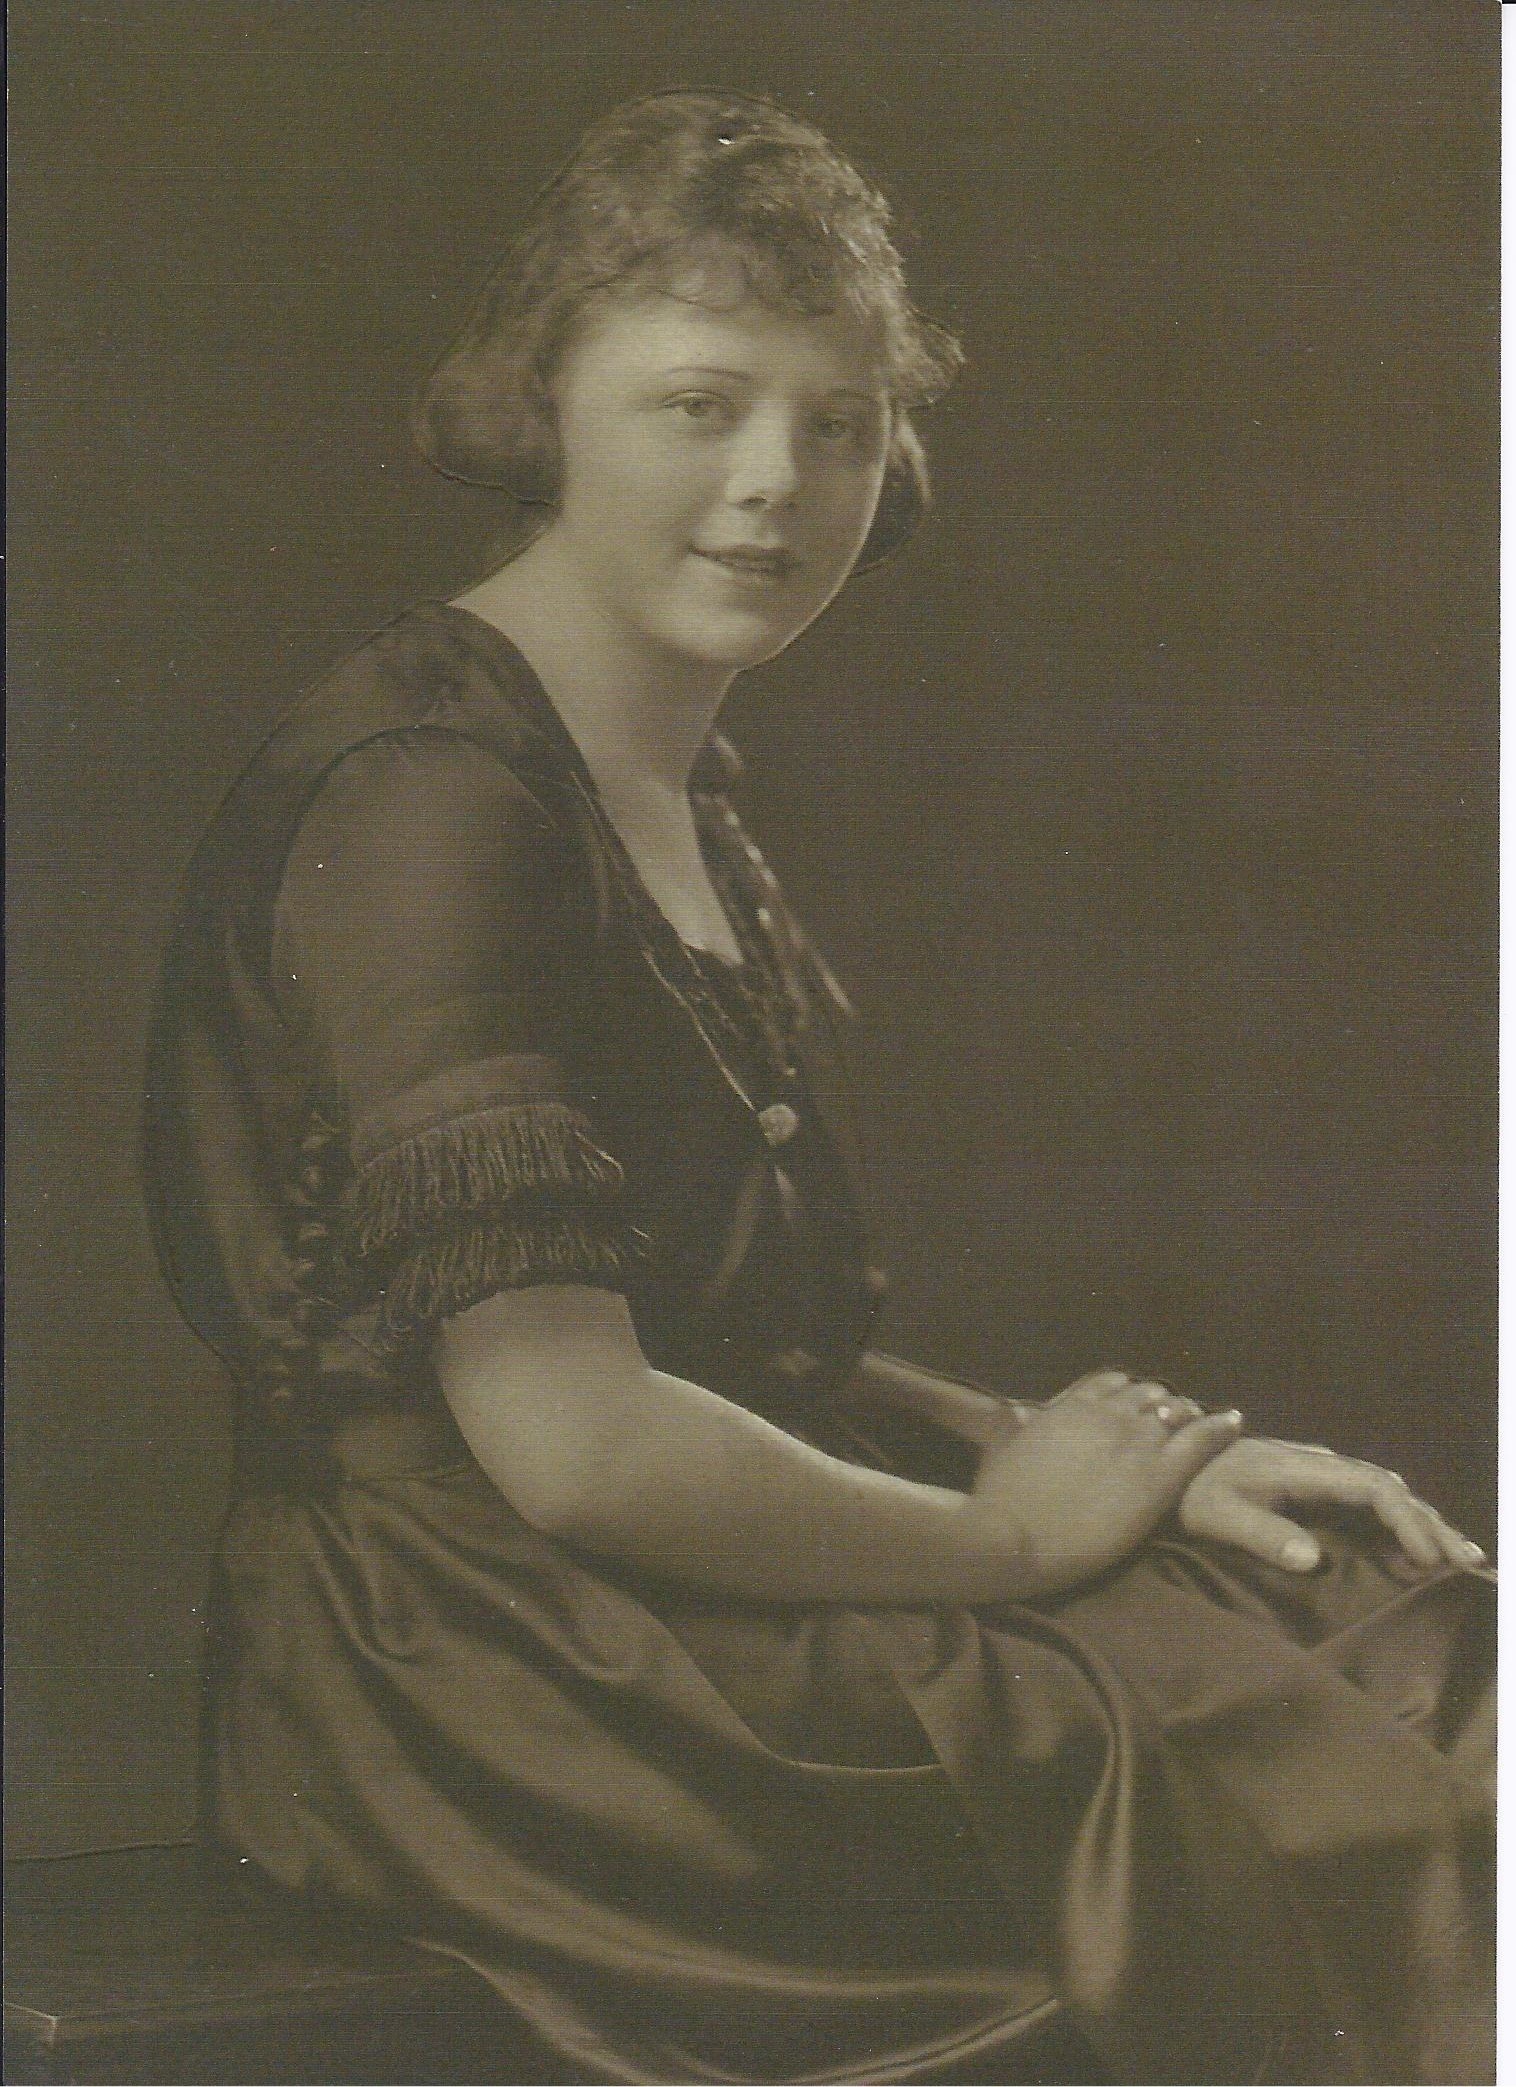 Lillian Byer circa 1918